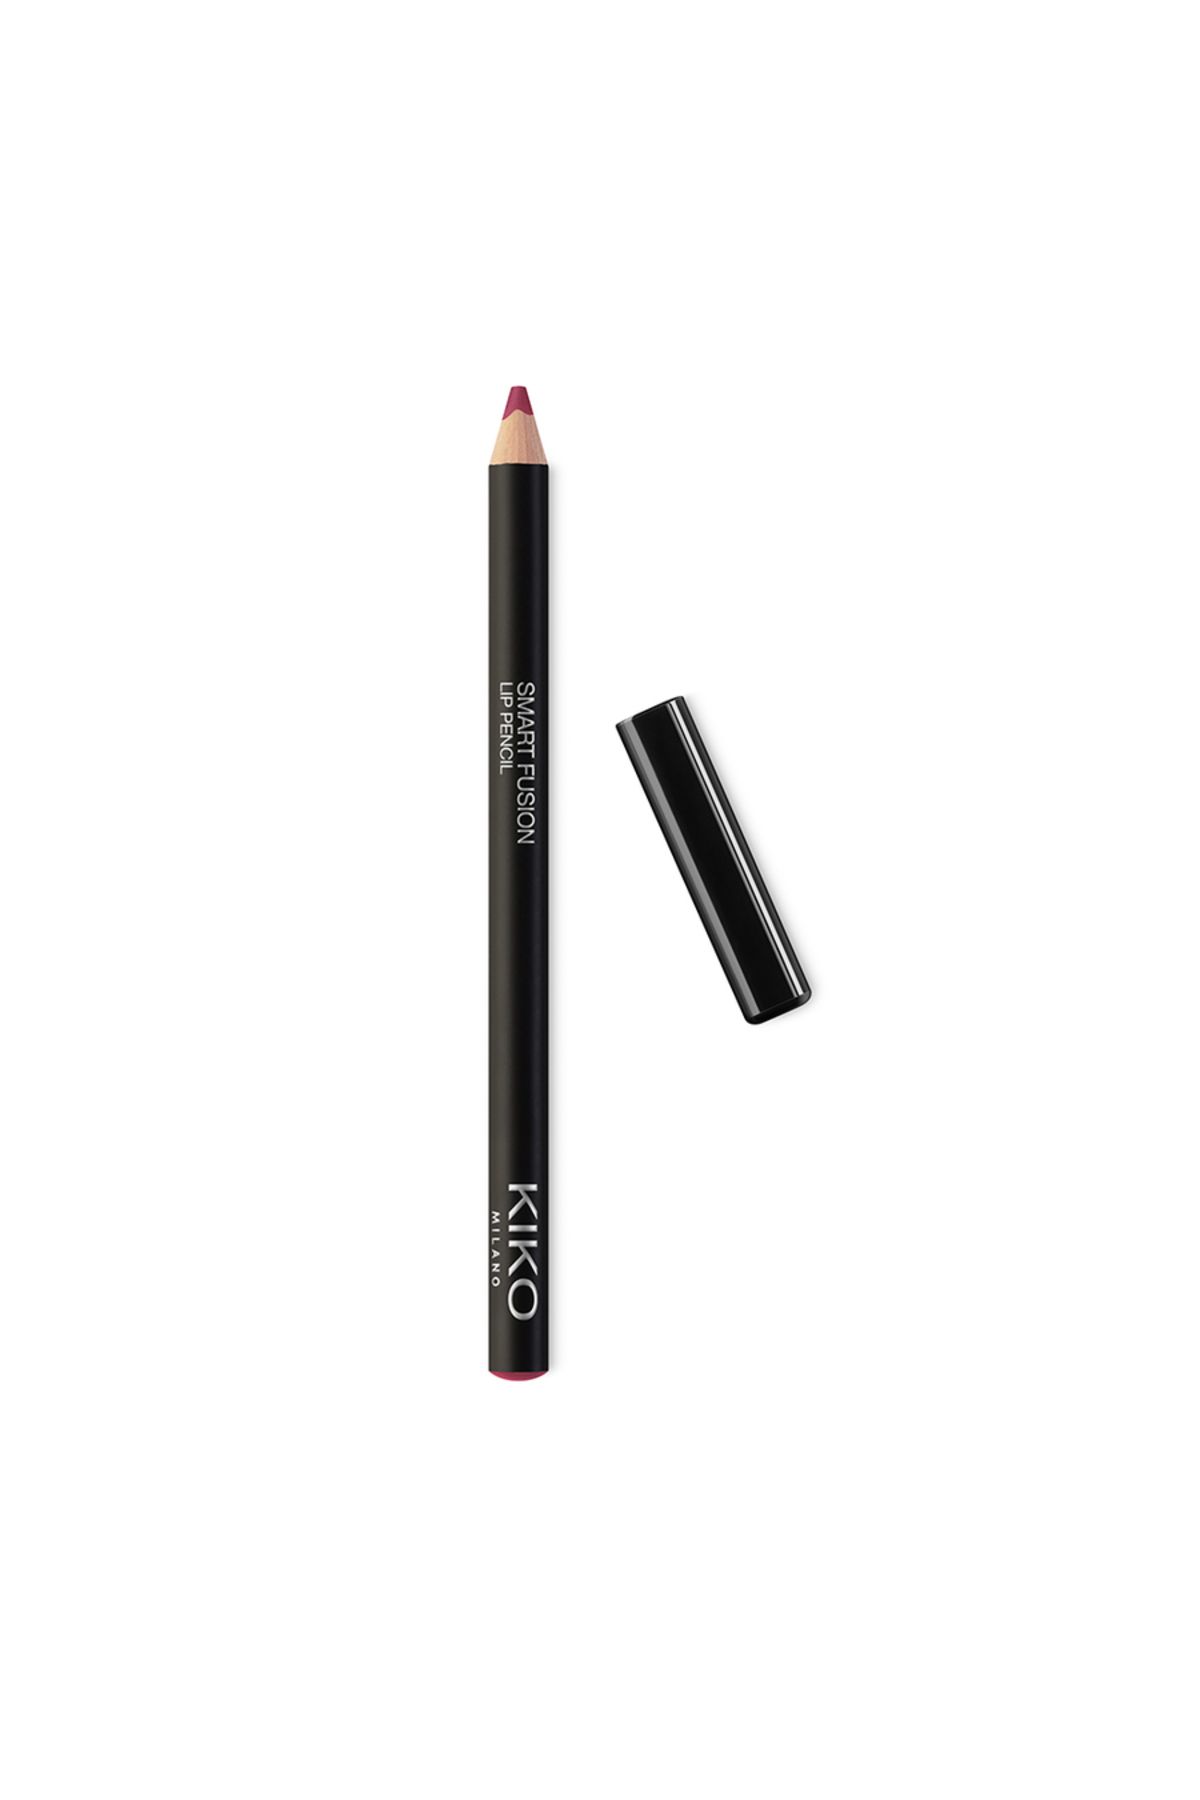 KIKO DUDAK KALEMİ - Smart Fusion Lip Pencil - 529 Pearly Mauve